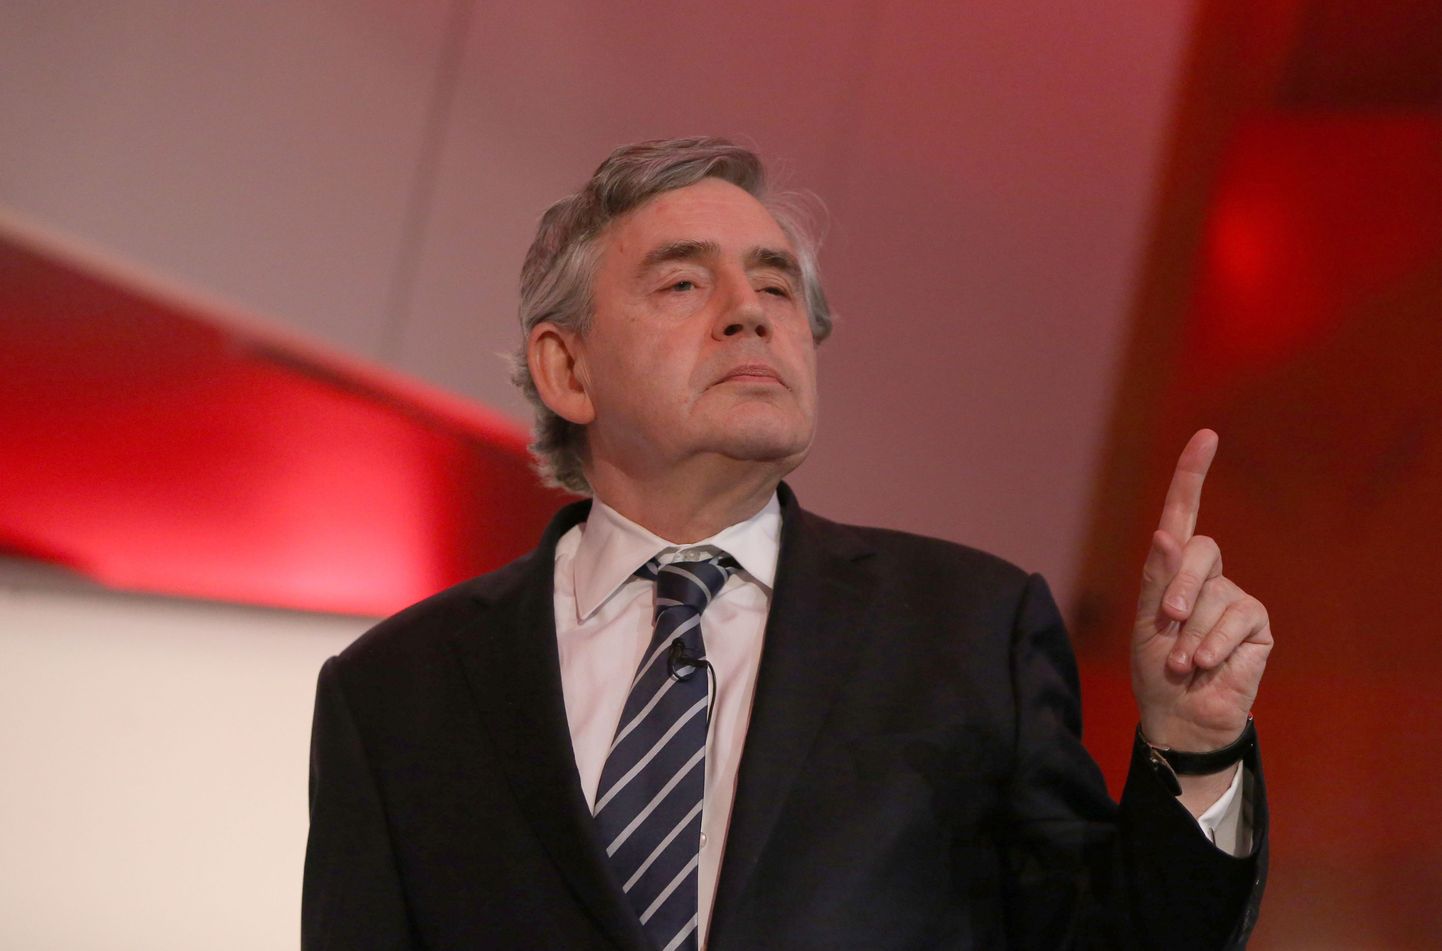 Briti ekspeaminister Gordon Brown